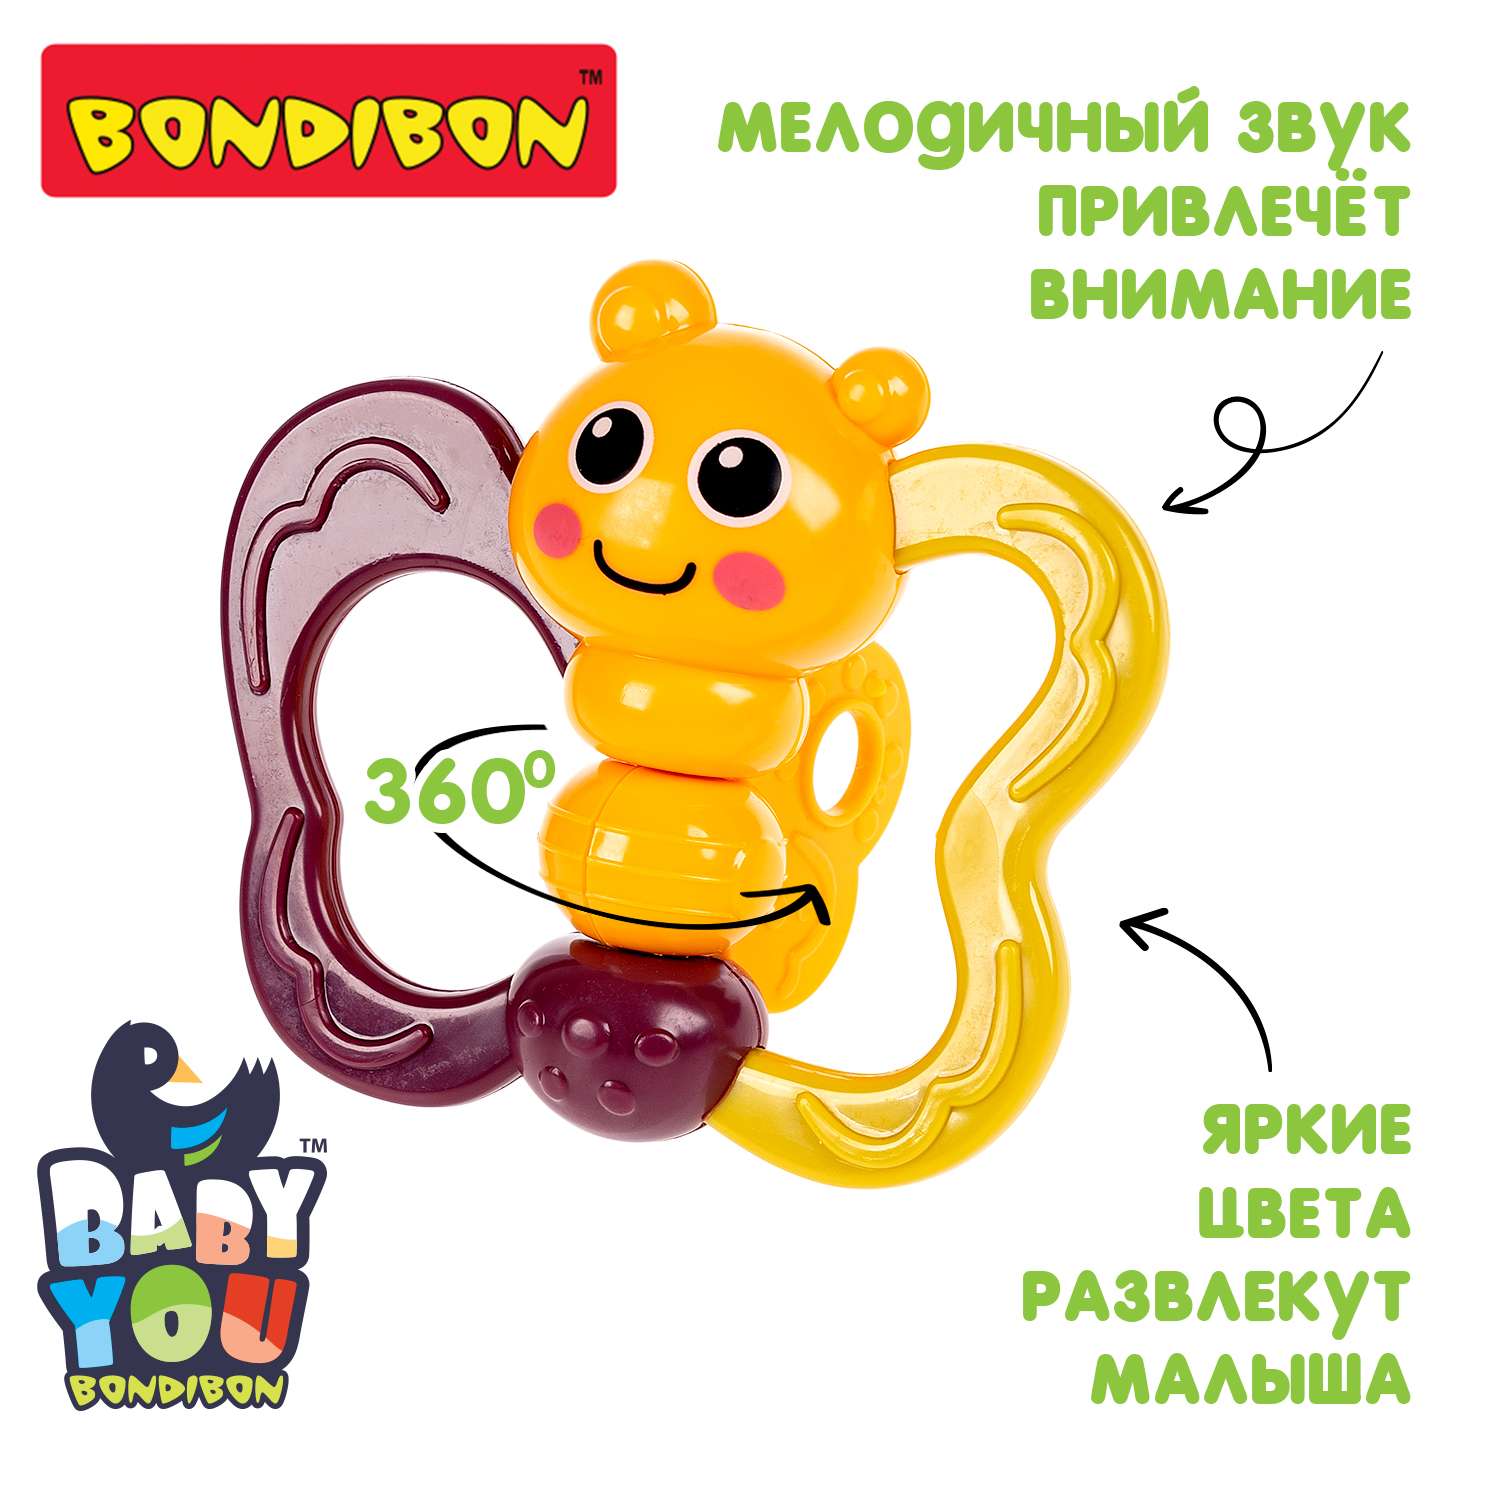 Погремушка BONDIBON Бабочка серия Baby You - фото 2